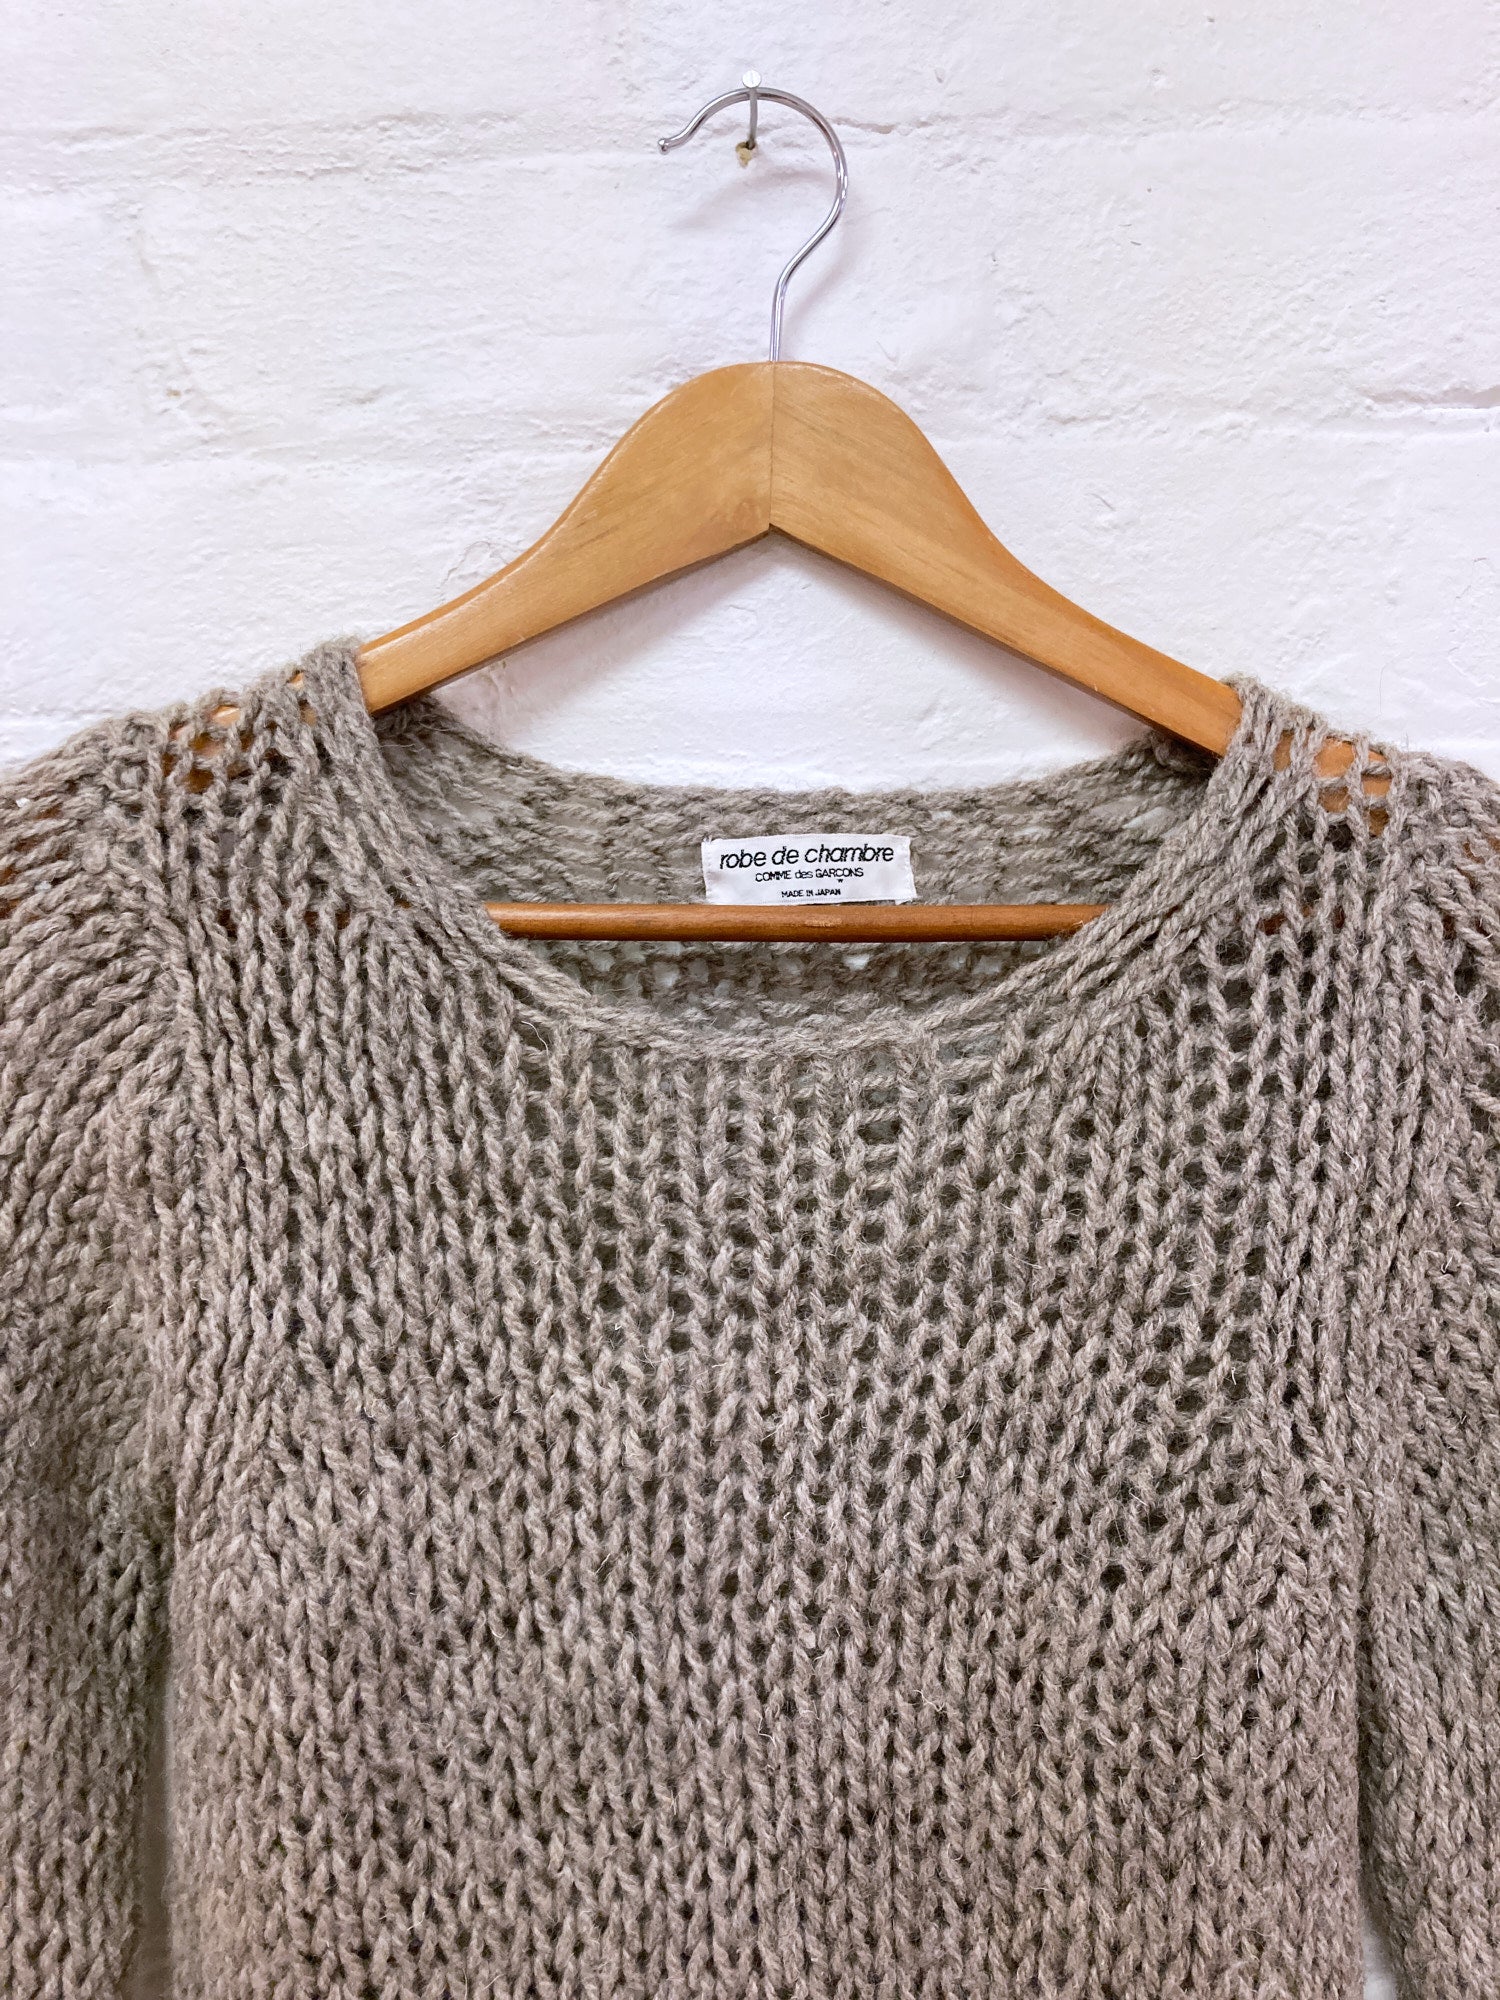 Robe de Chambre Comme des Garcons 1994 grey brown wool loose knit jumper - S